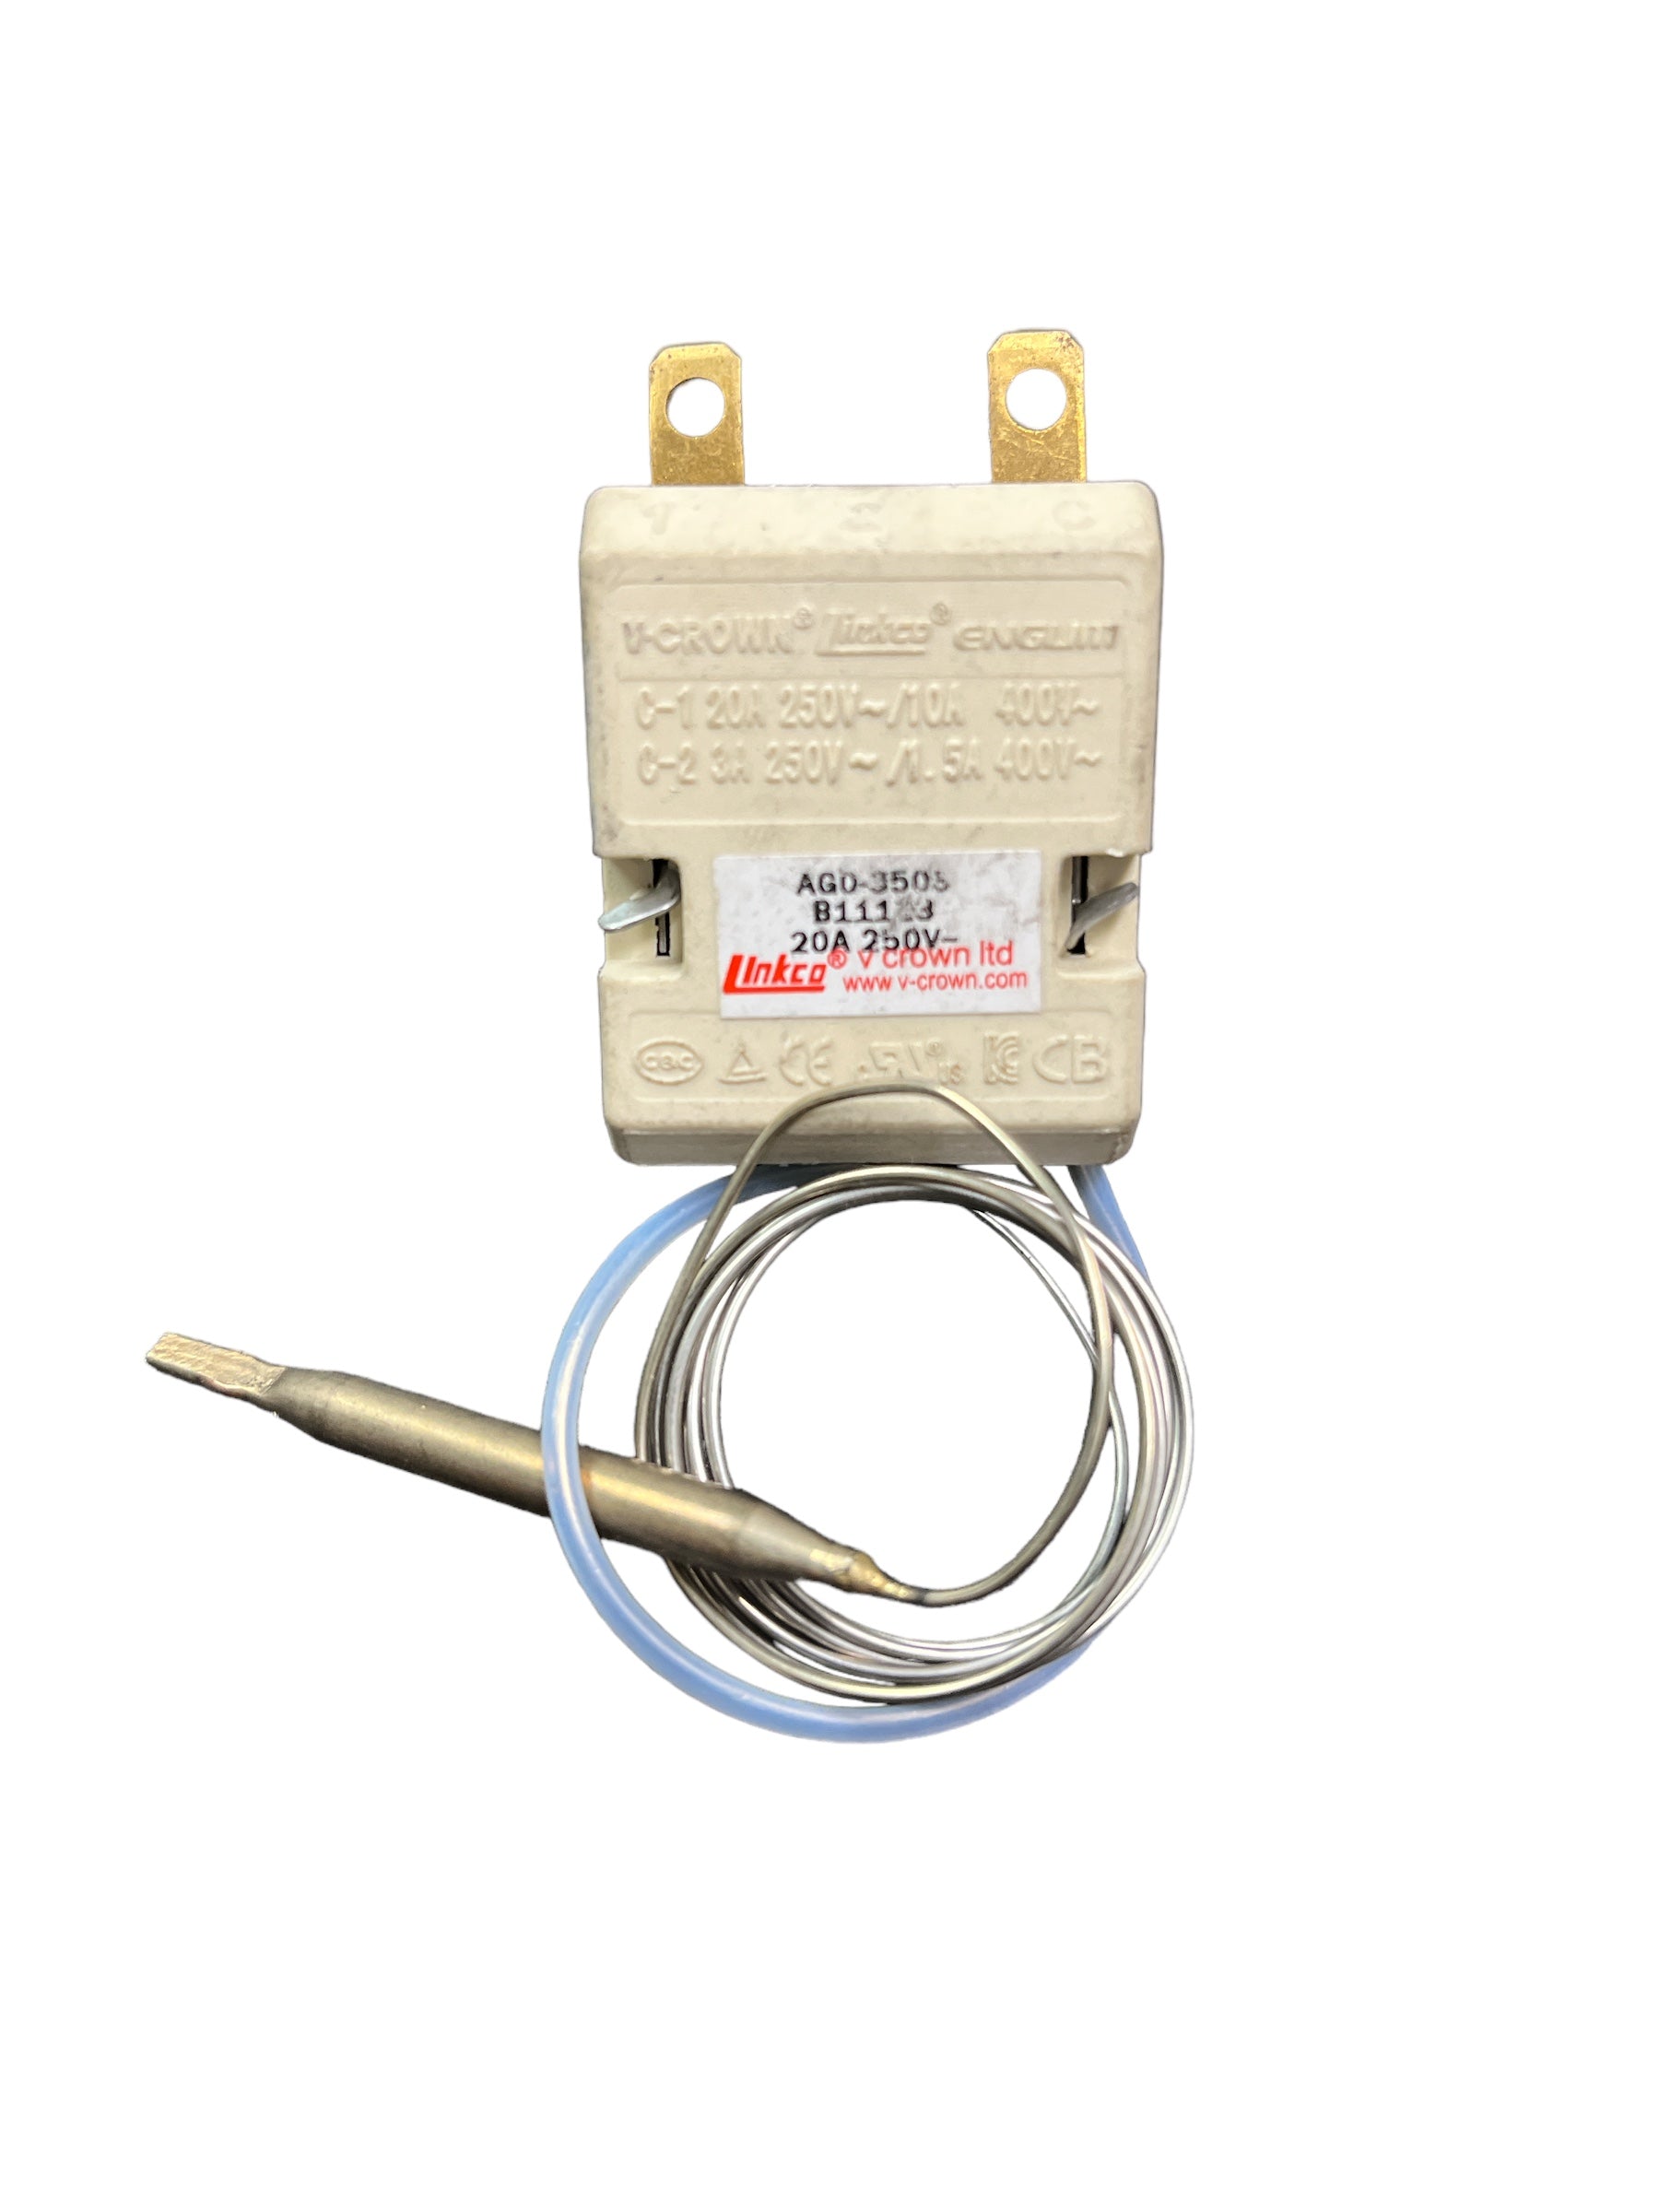 RMET168  Thermostat 50-350 °C / Termostato con perilla 50-350 °C  #TET-018